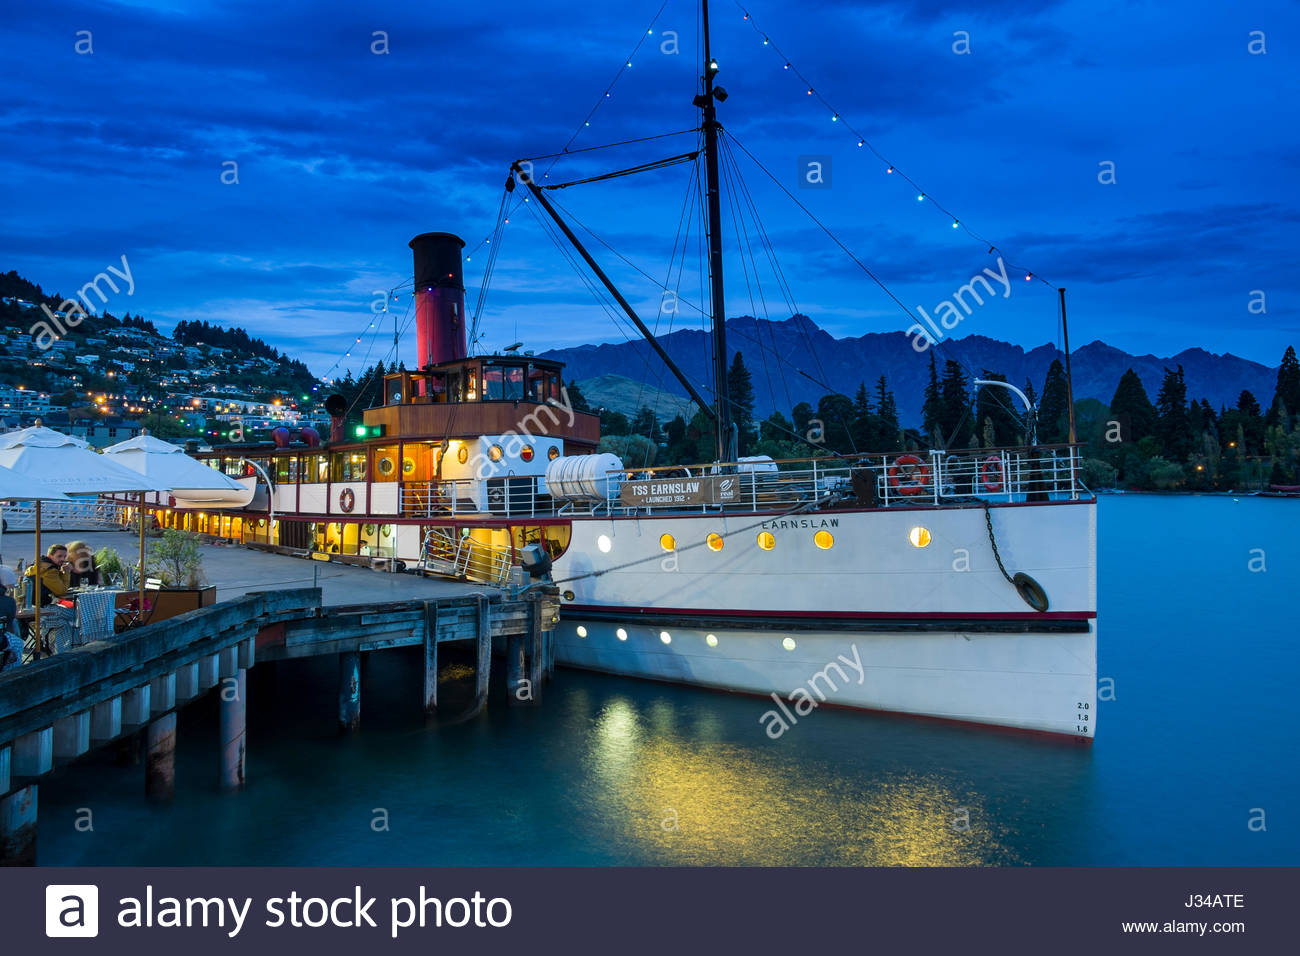 tss-earnslaw-vintage-steamship-at-dock-o